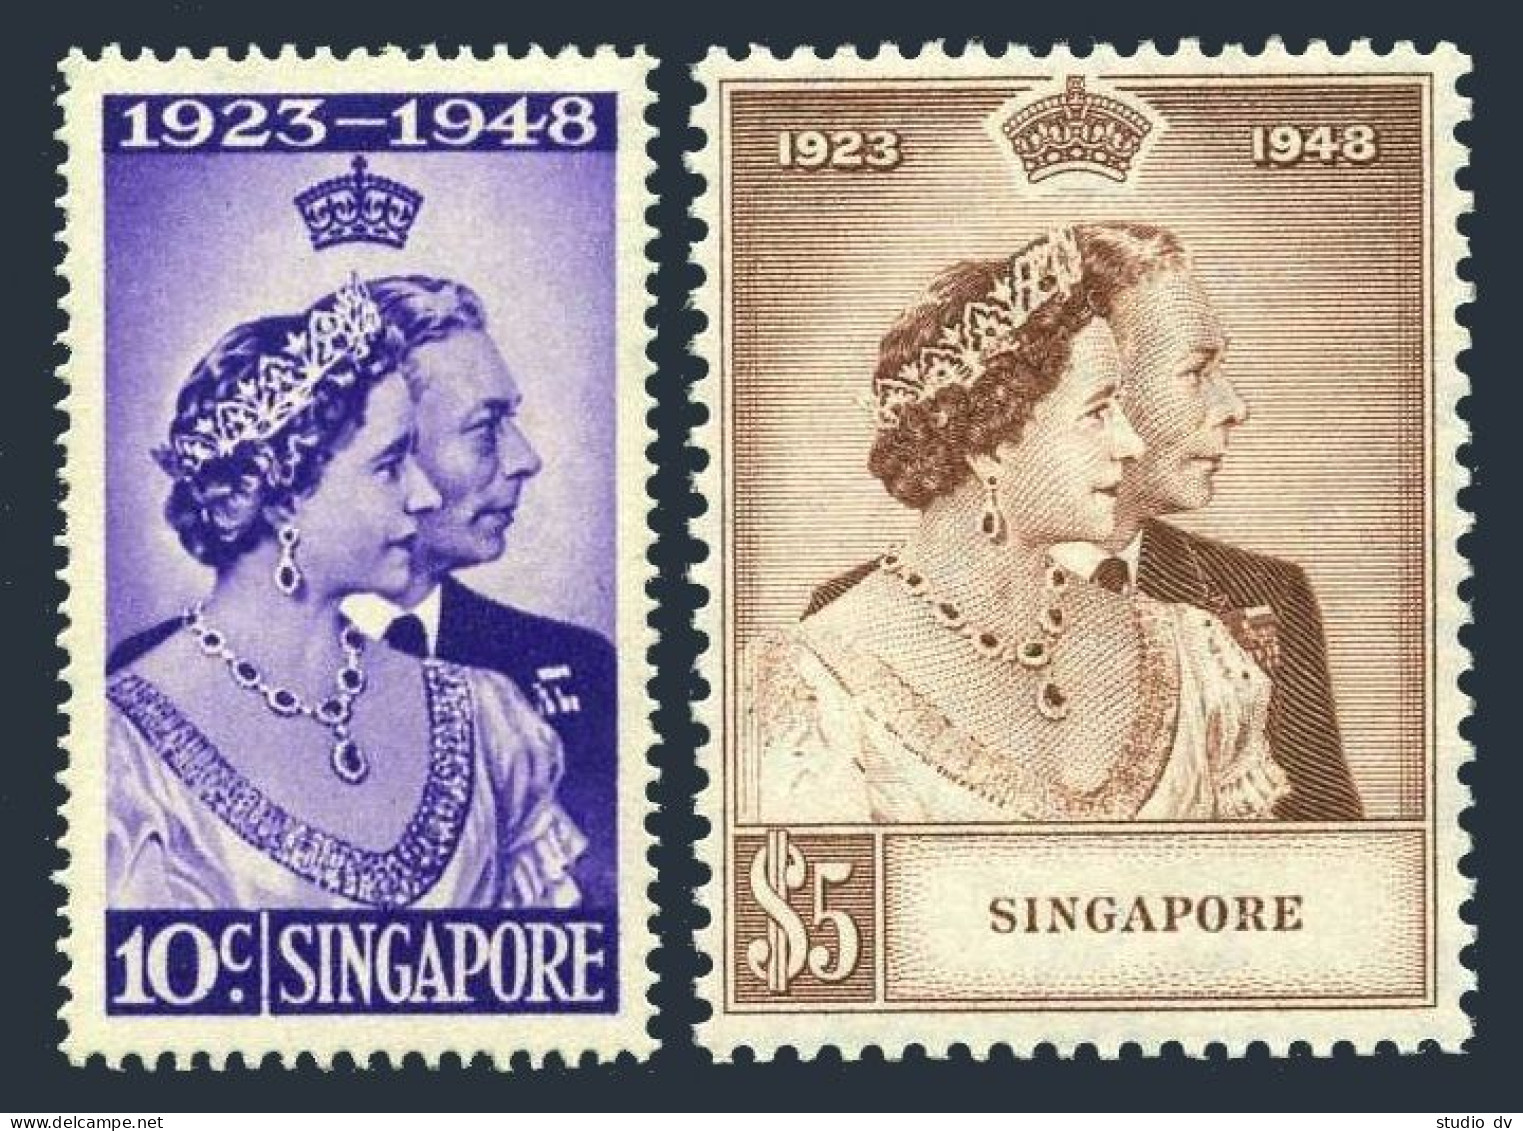 Singapore 21-22, Hinged. Mi 21-22. Silver Wedding, 1948. George VI, Elizabeth. - Singapour (1959-...)